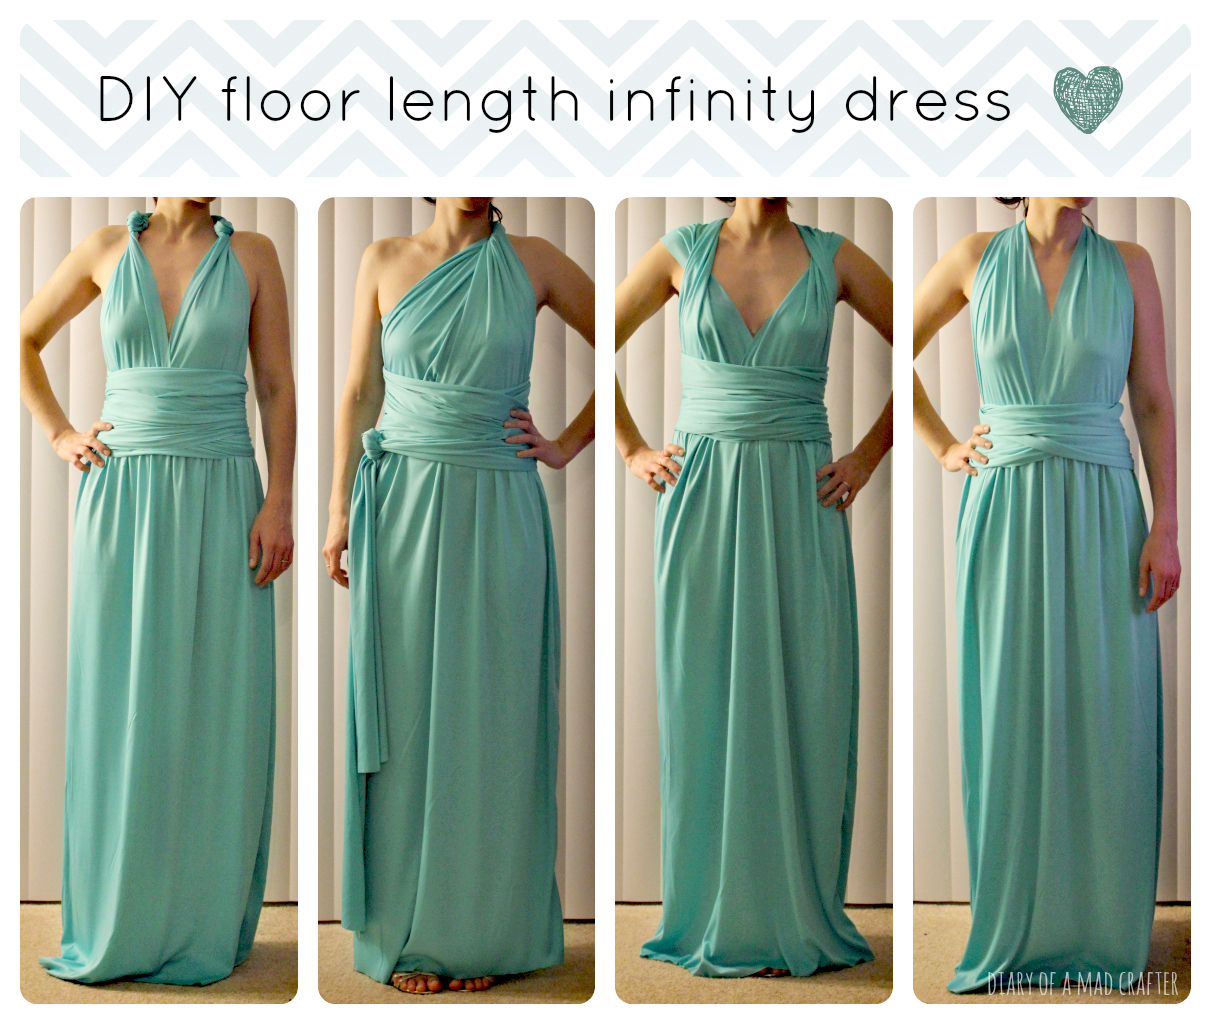 Diy floor length infinity dress